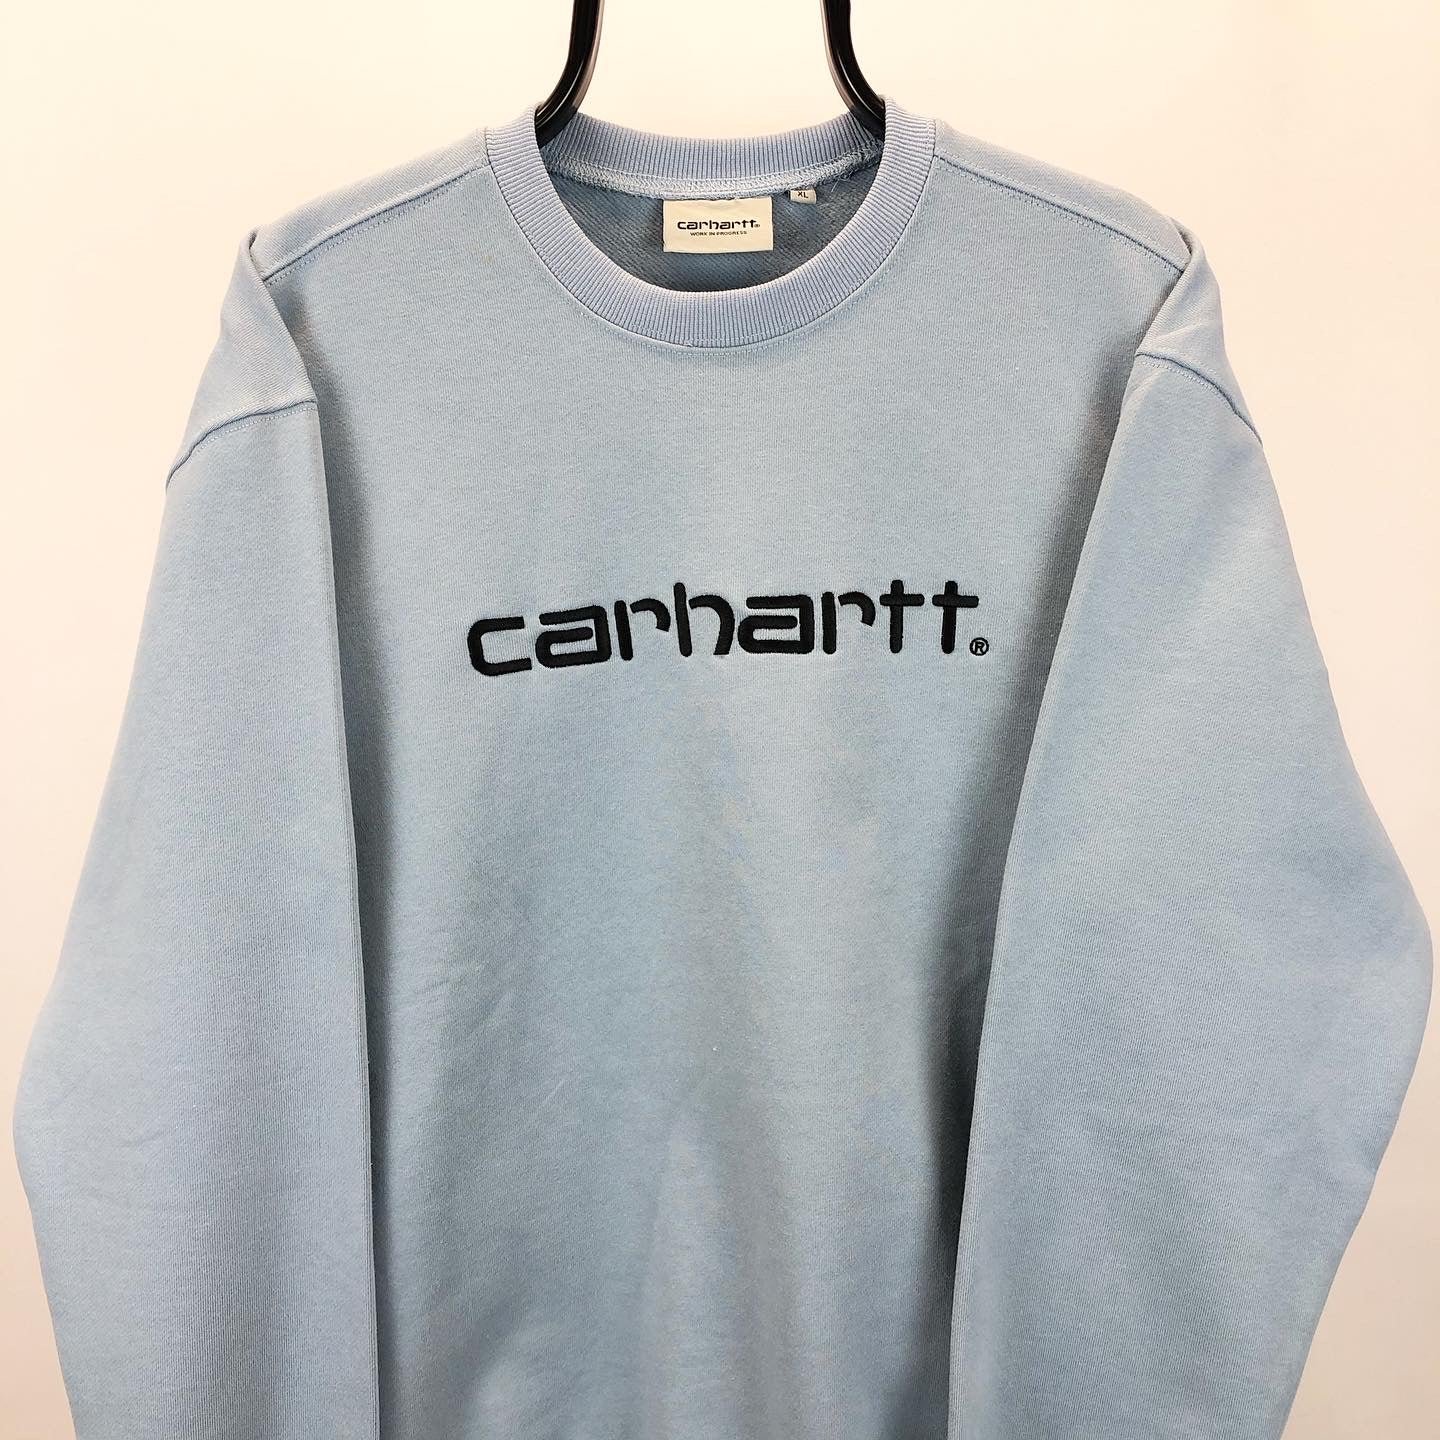 Carhartt Spellout Sweatshirt in Baby Blue - Men's Large/Women's XL